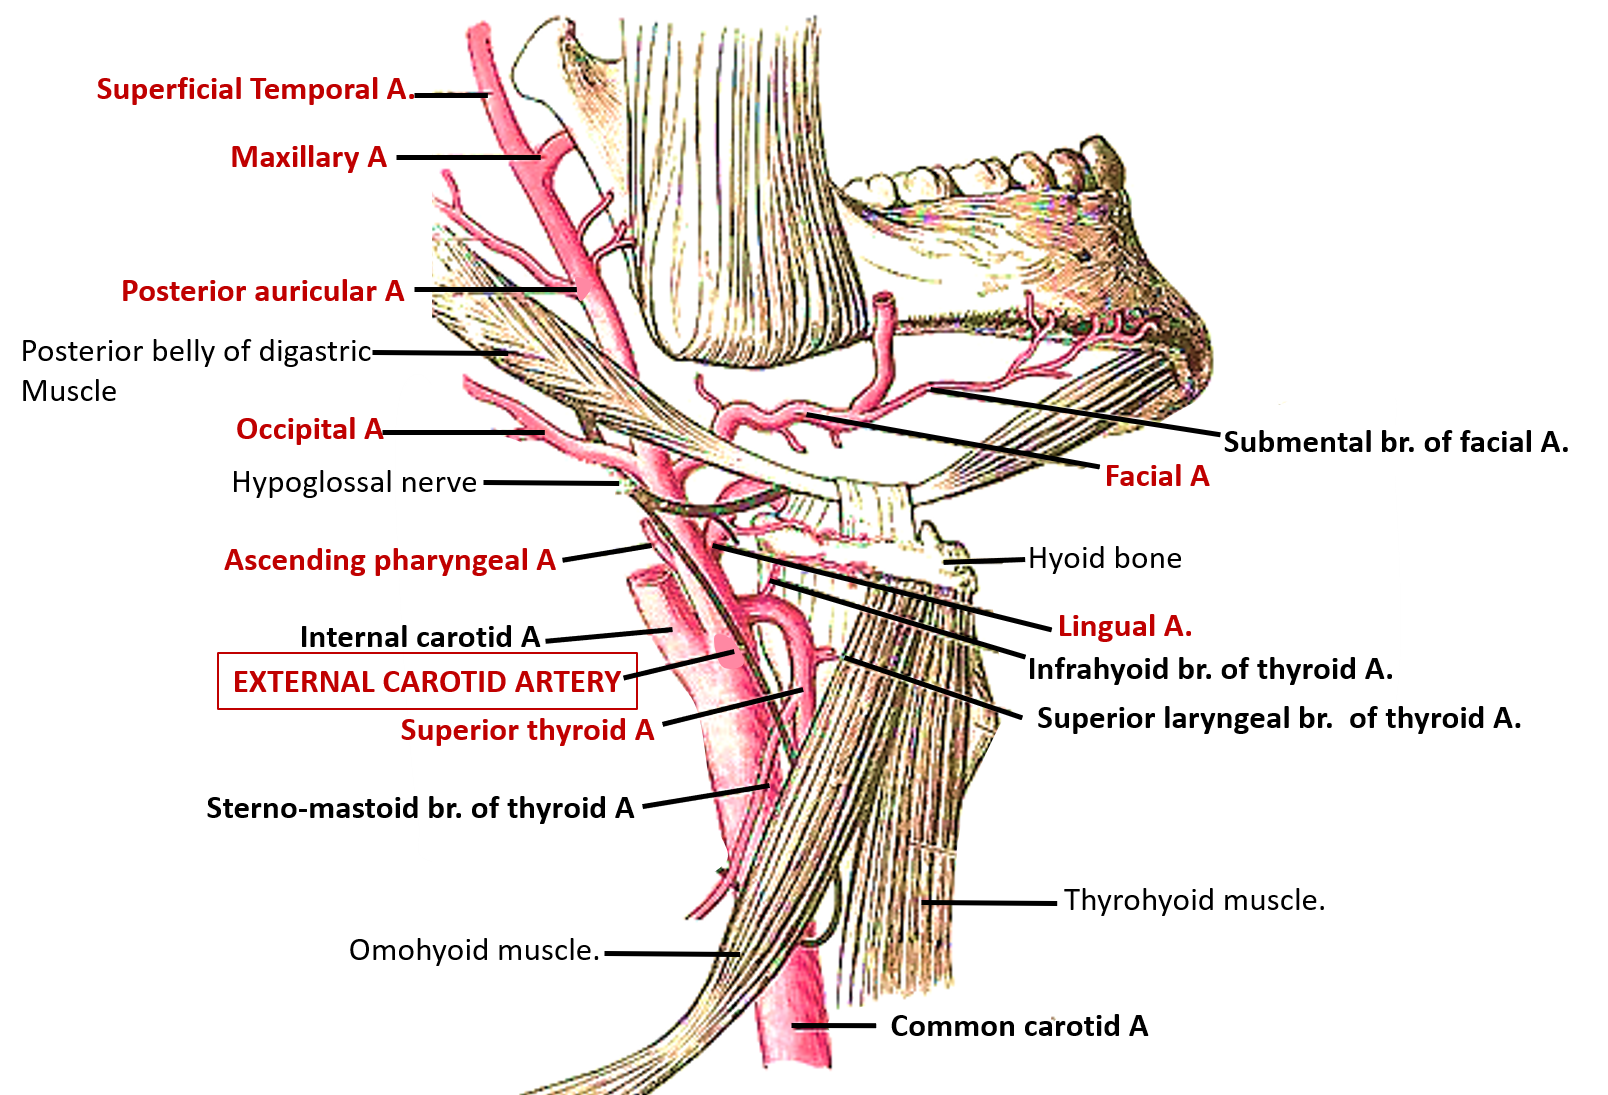 branches of external carotid artery